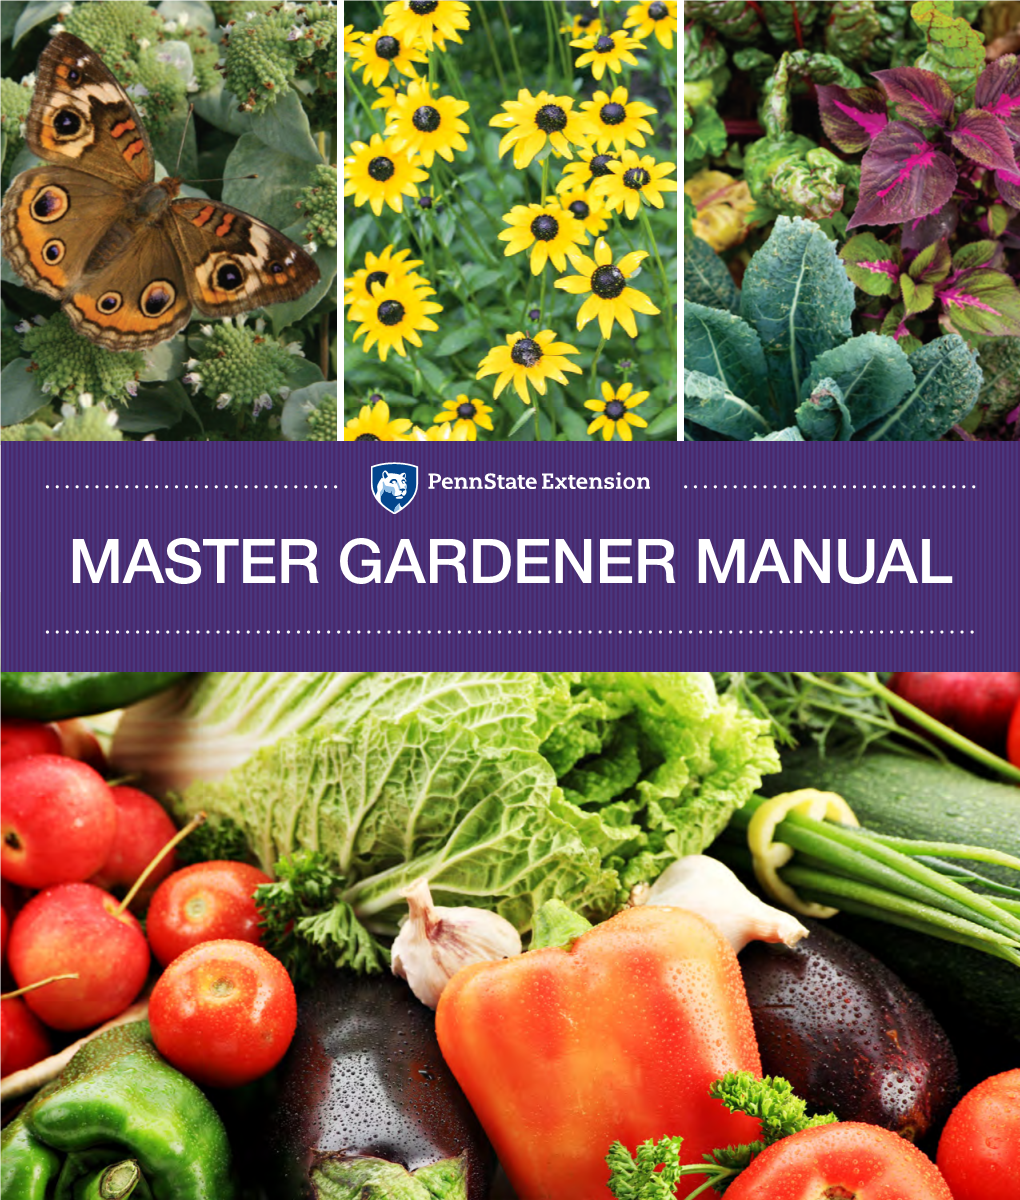 Penn State Extension Master Gardener Manual